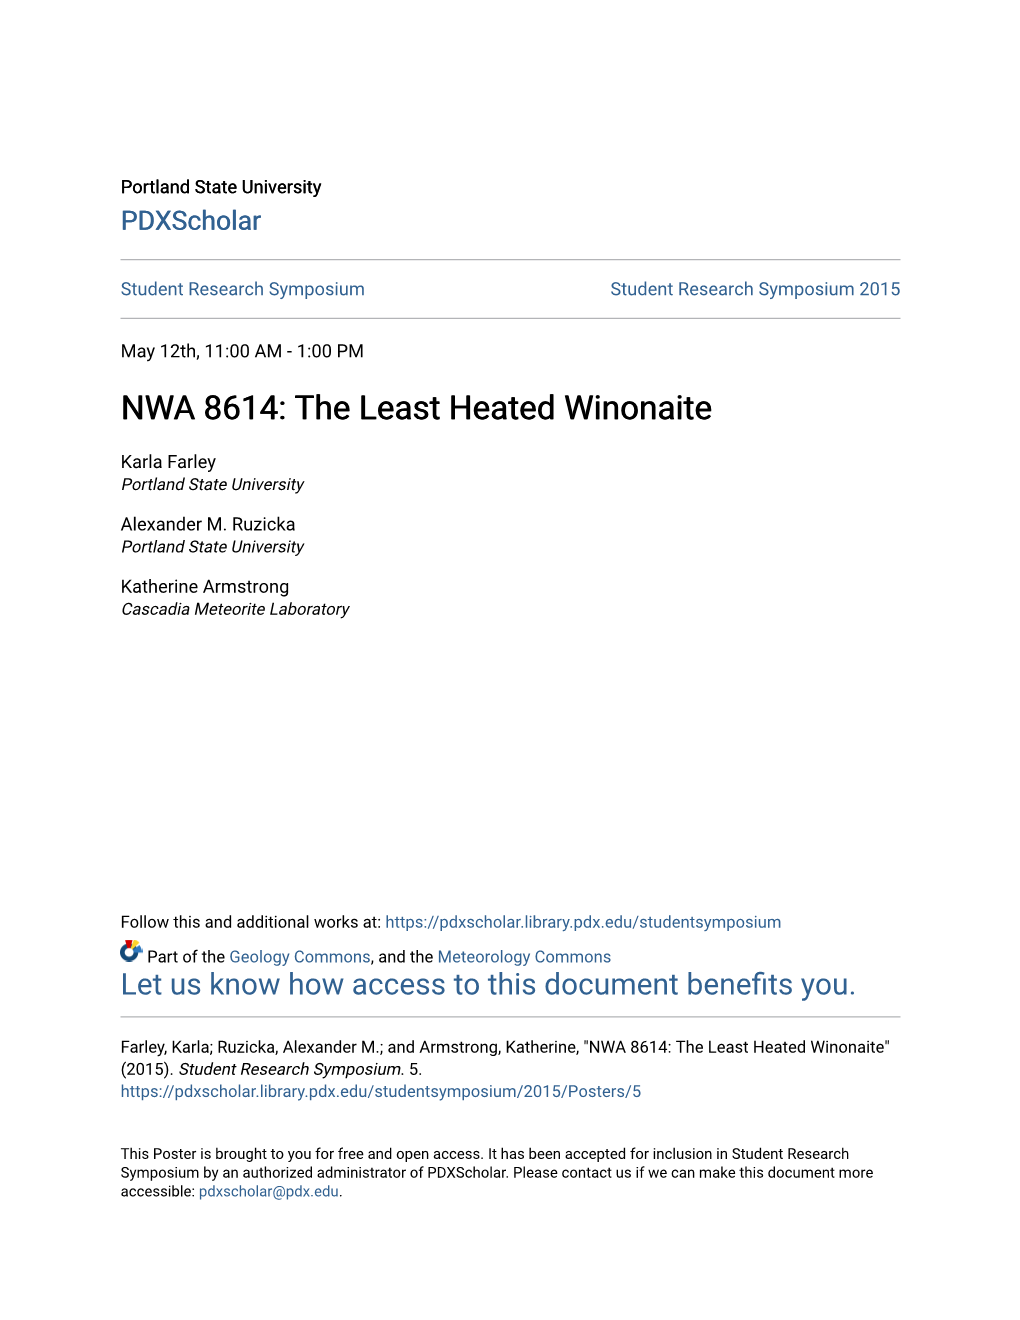 NWA 8614: the Least Heated Winonaite